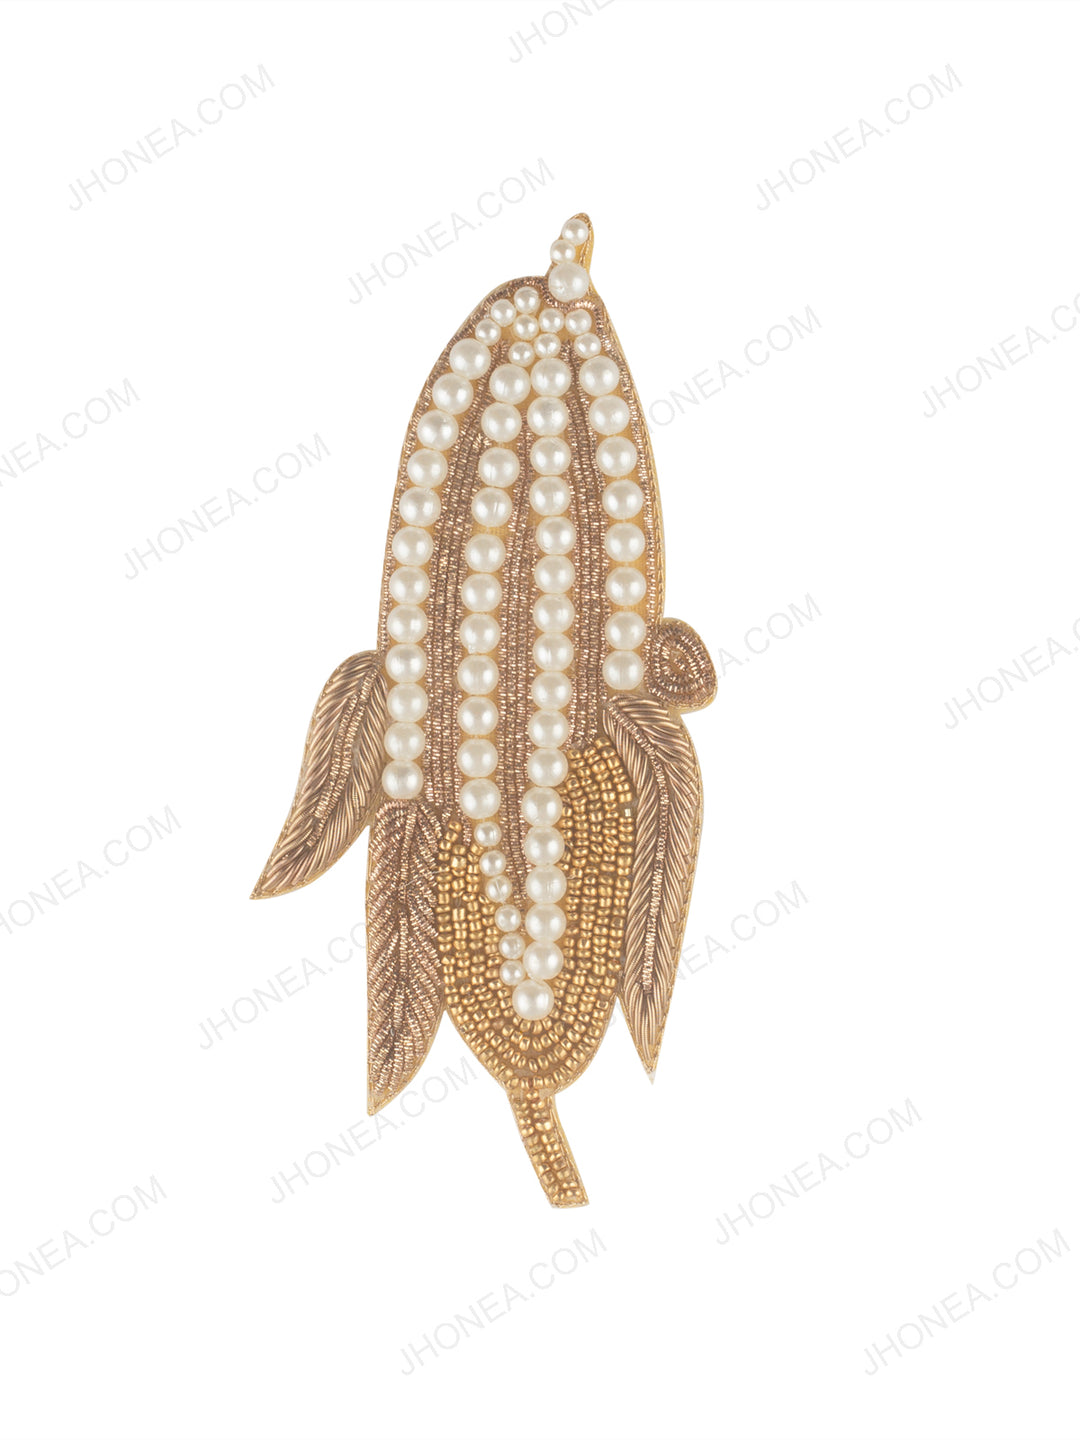 Decorative Golden White Pearl Handmade Corn Patch